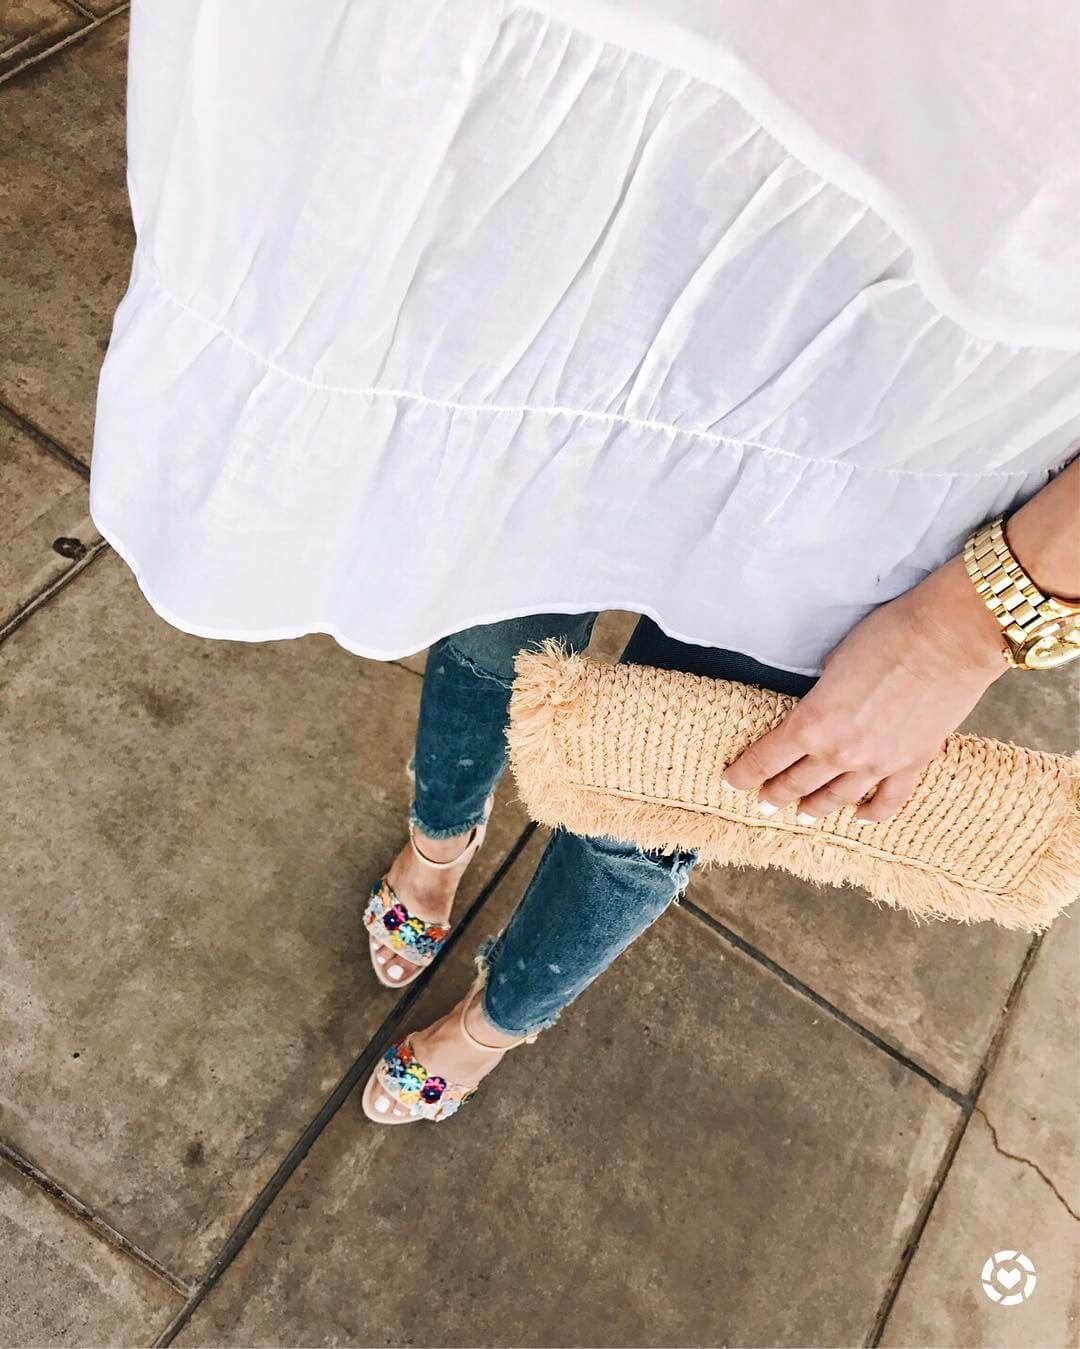 brighton keller selfie with white top and dee keller floral shoes